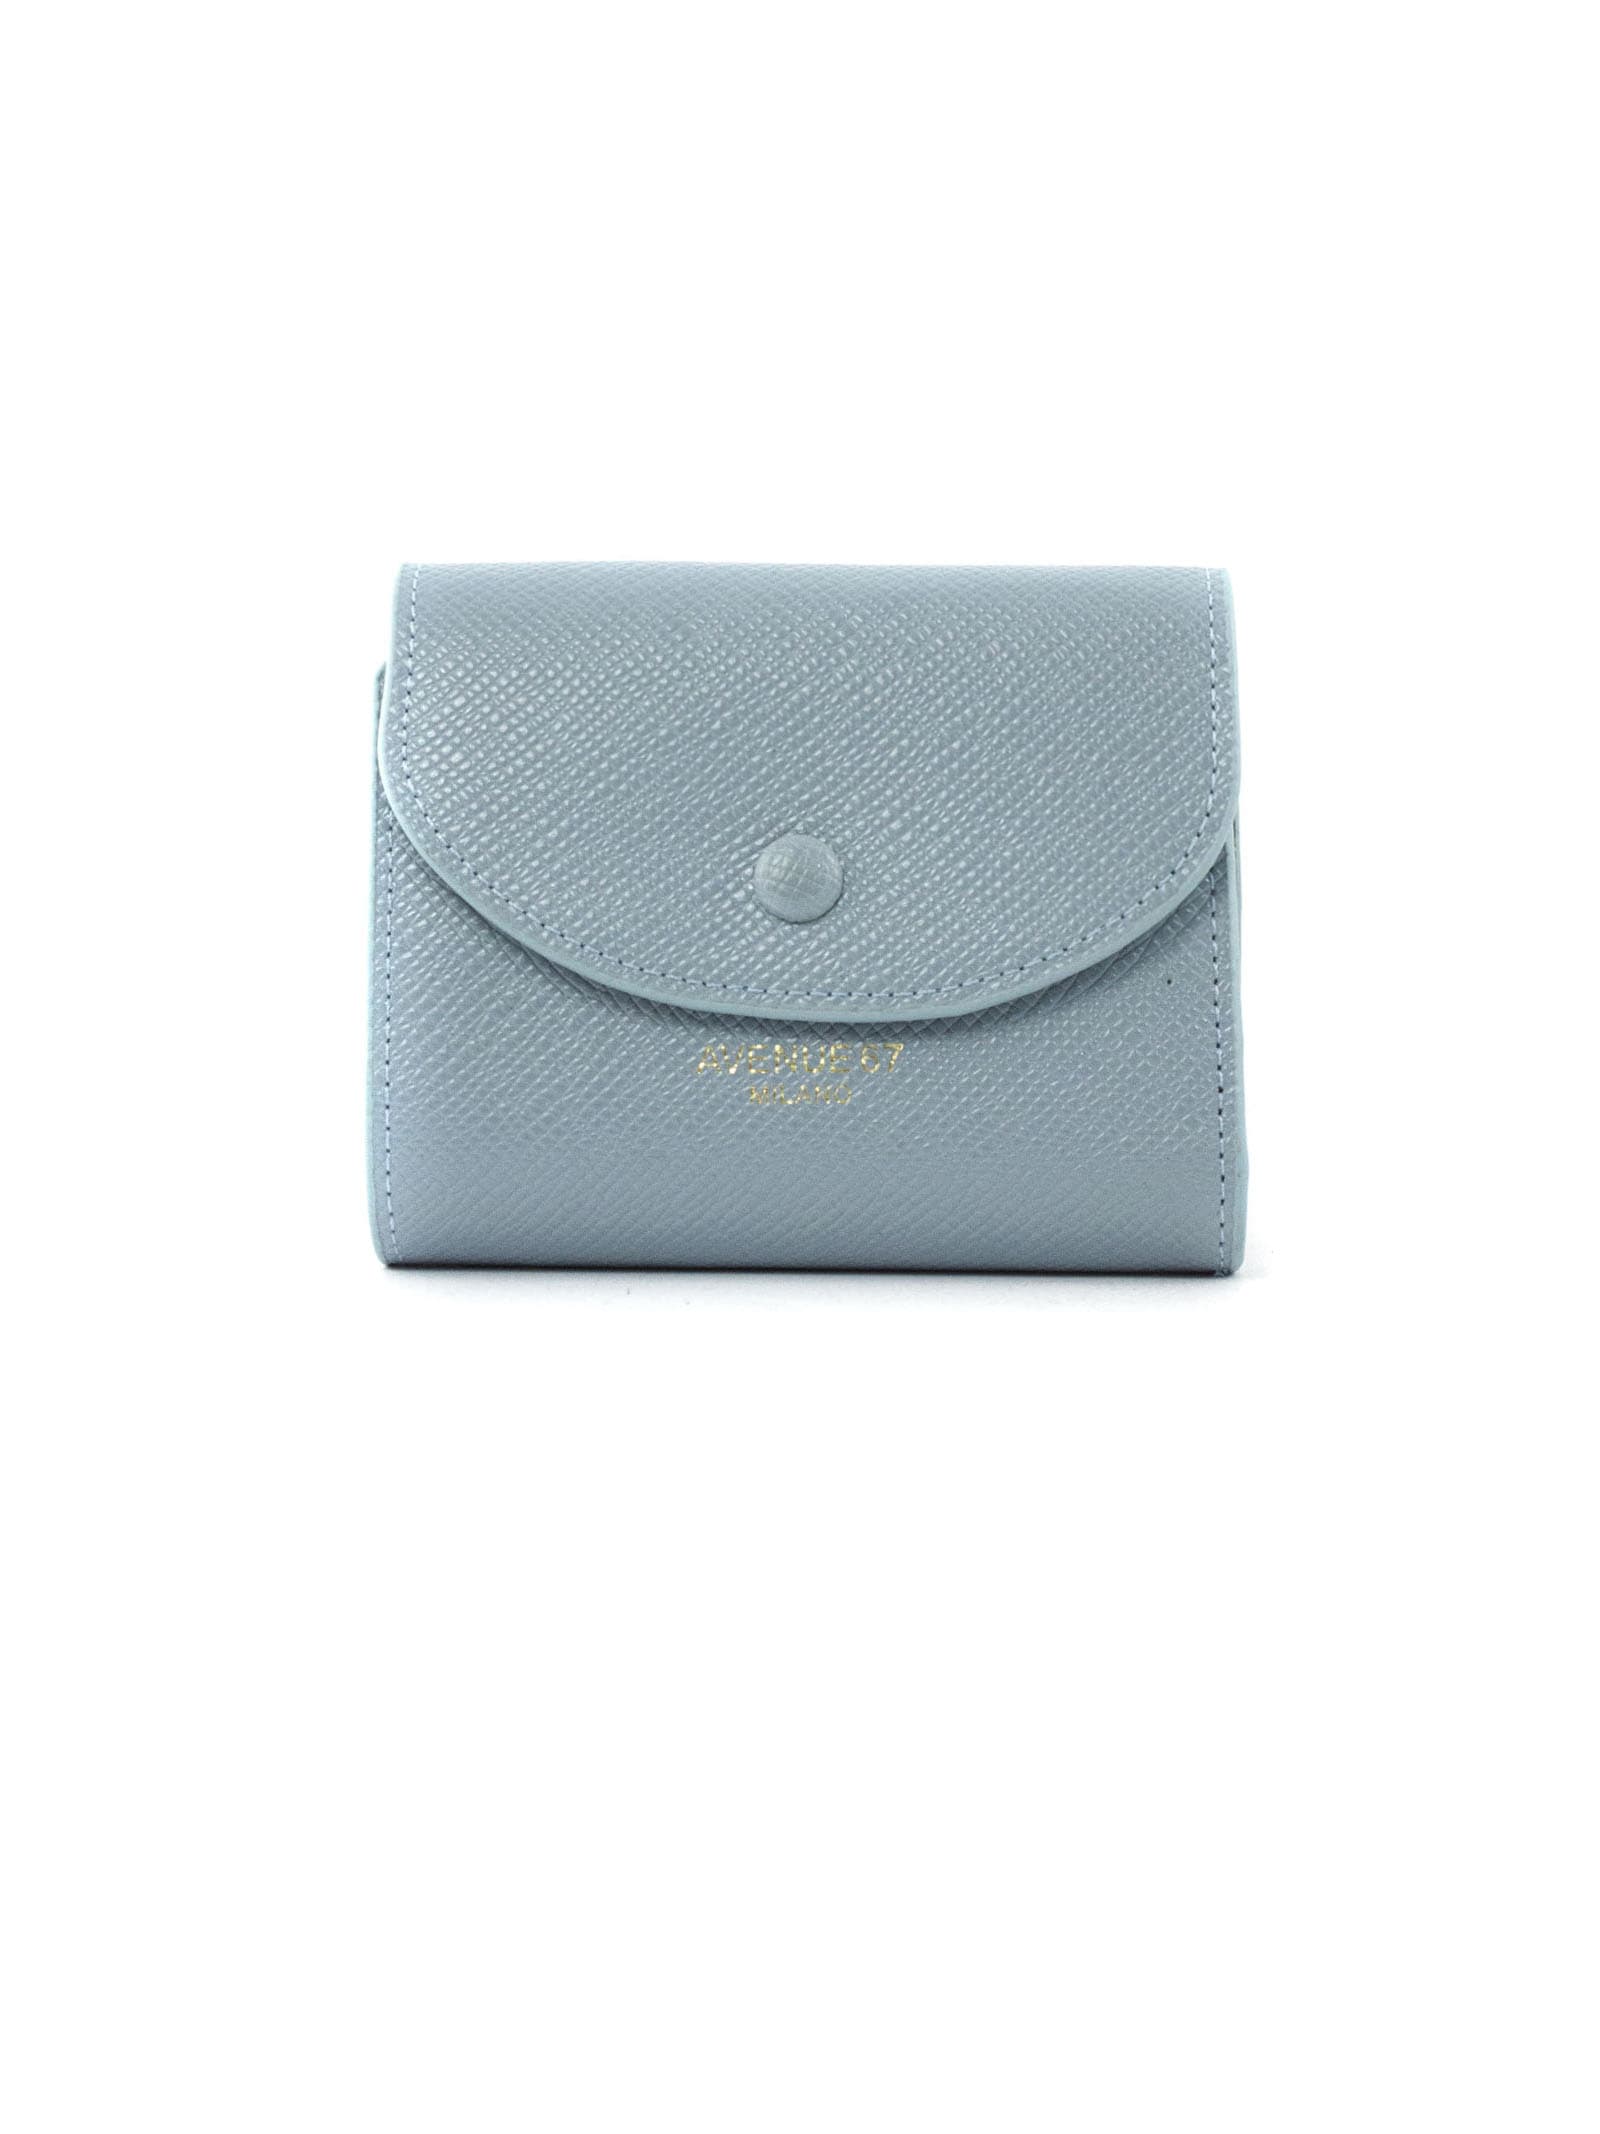 Avenue 67 Light Blue Leather Mini Wallet